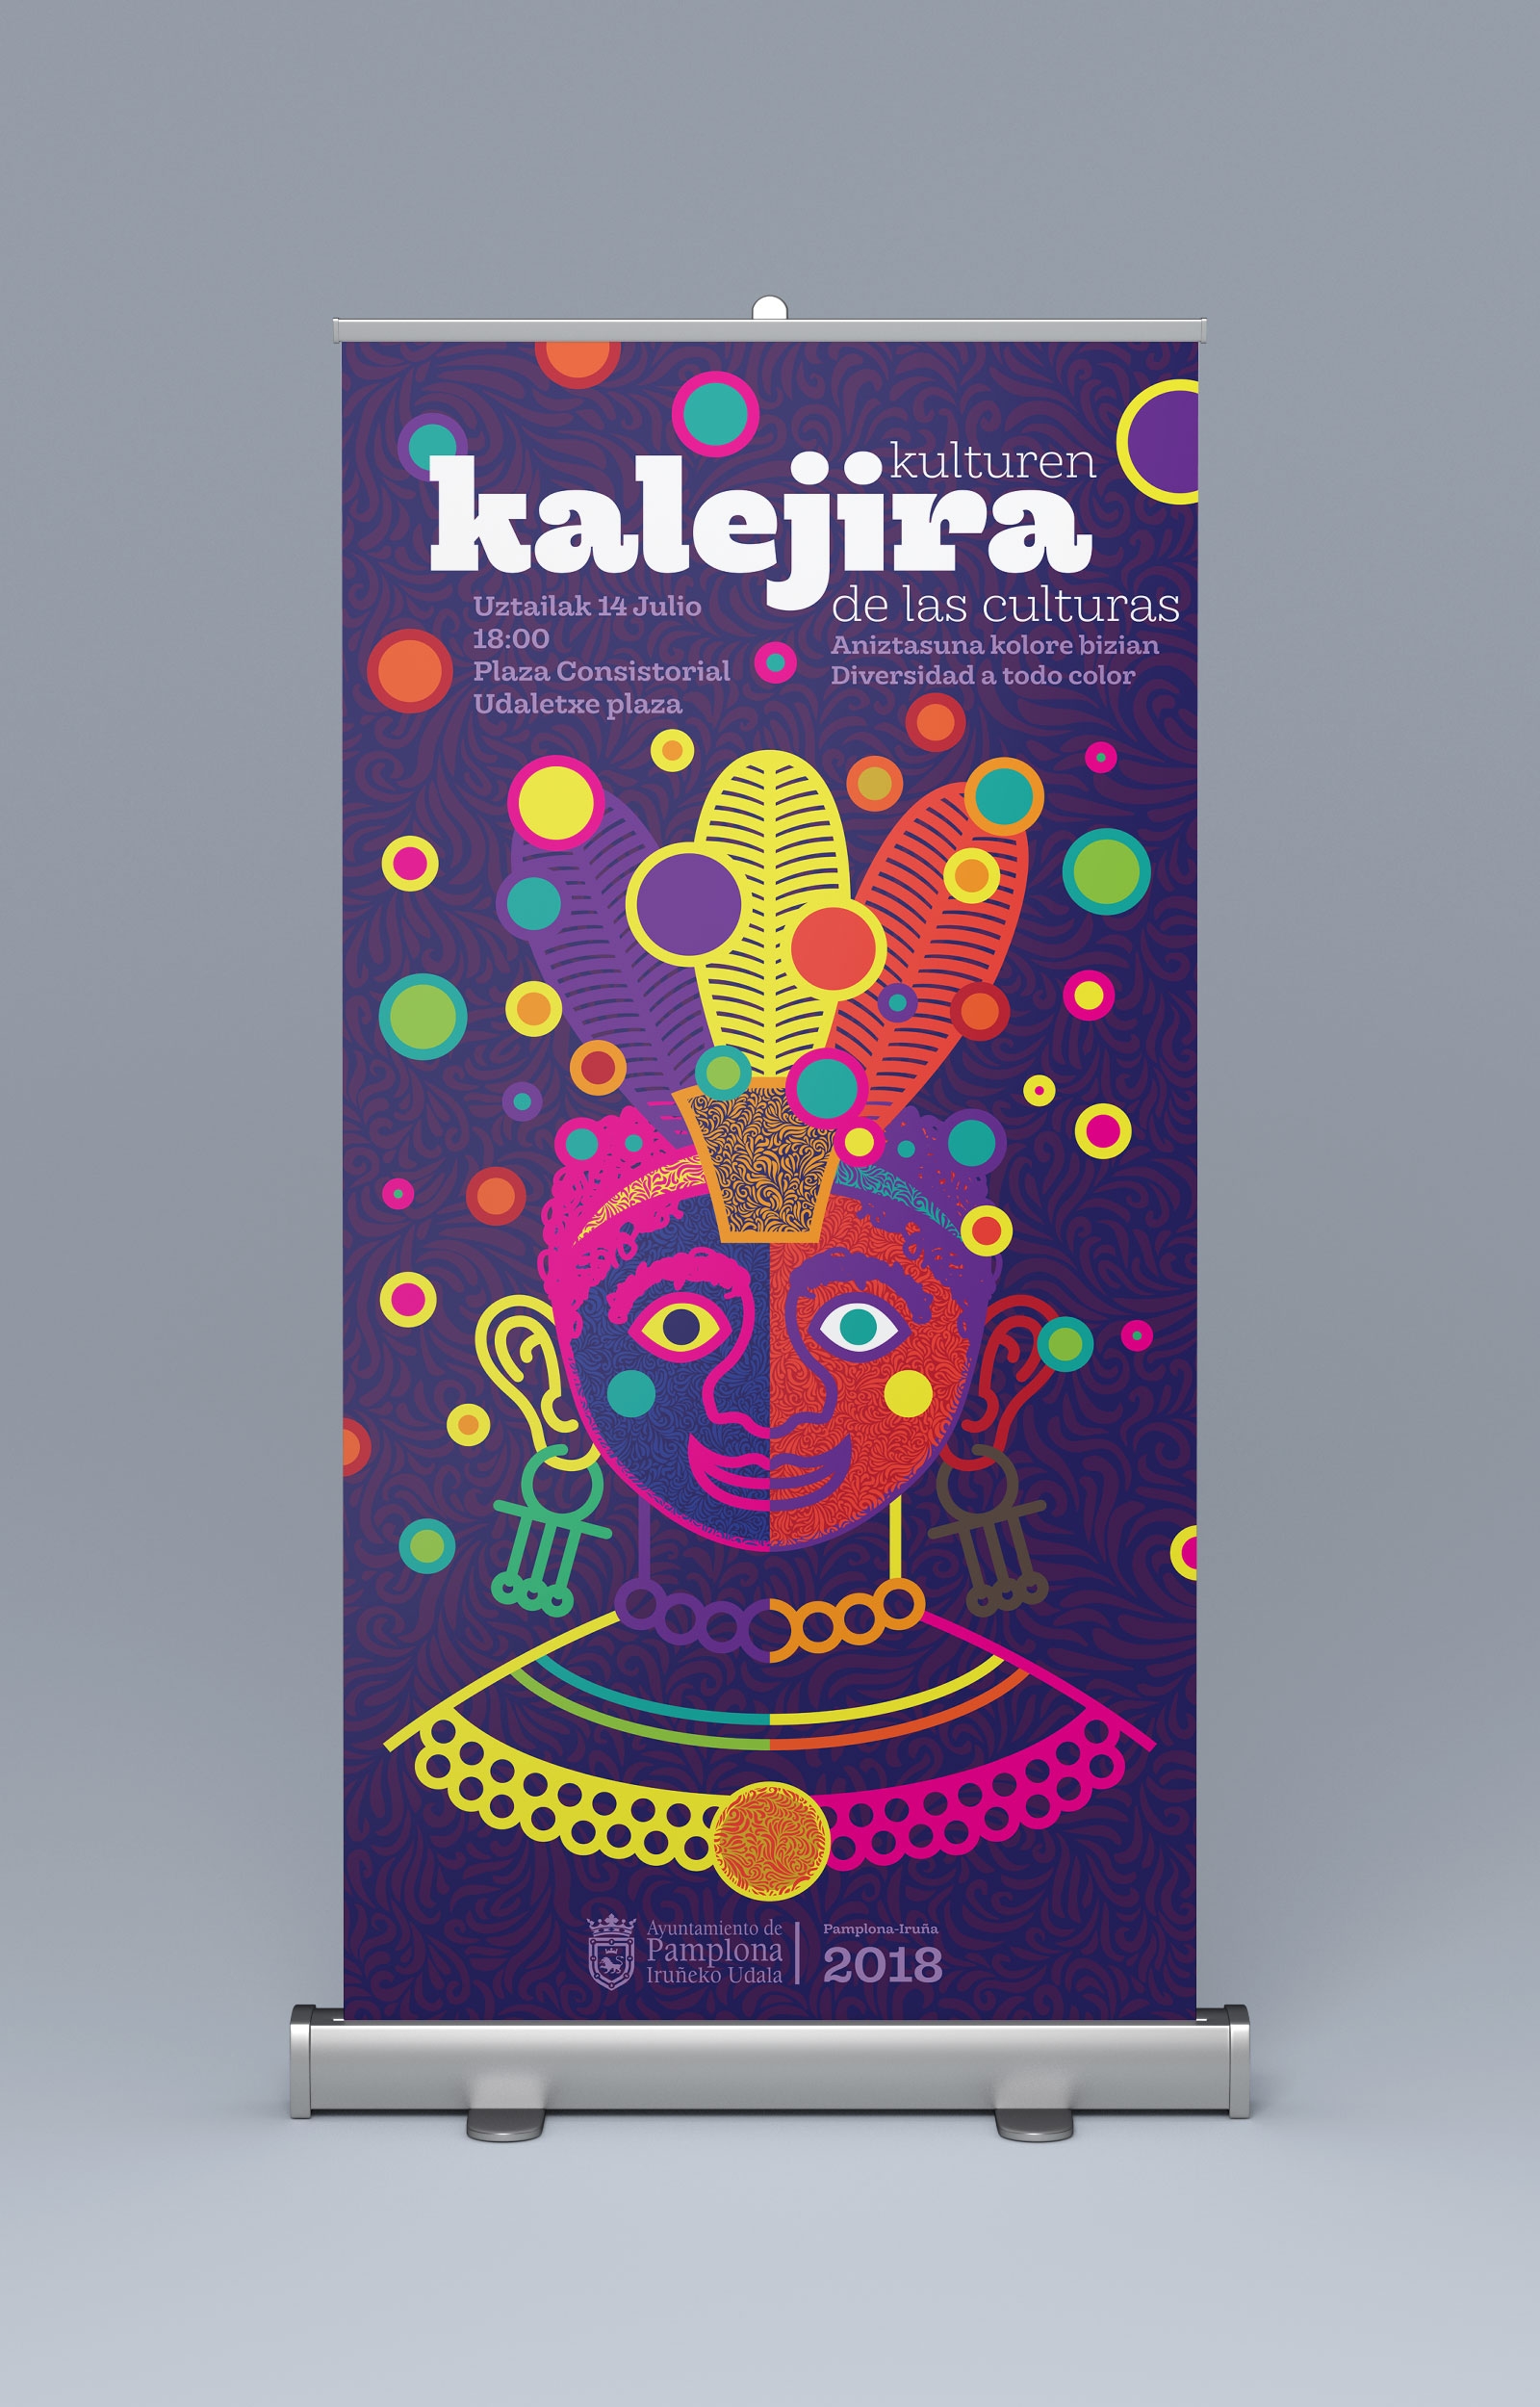 Roll up para la iniciativa "Kulturen kalejira de las culturas"